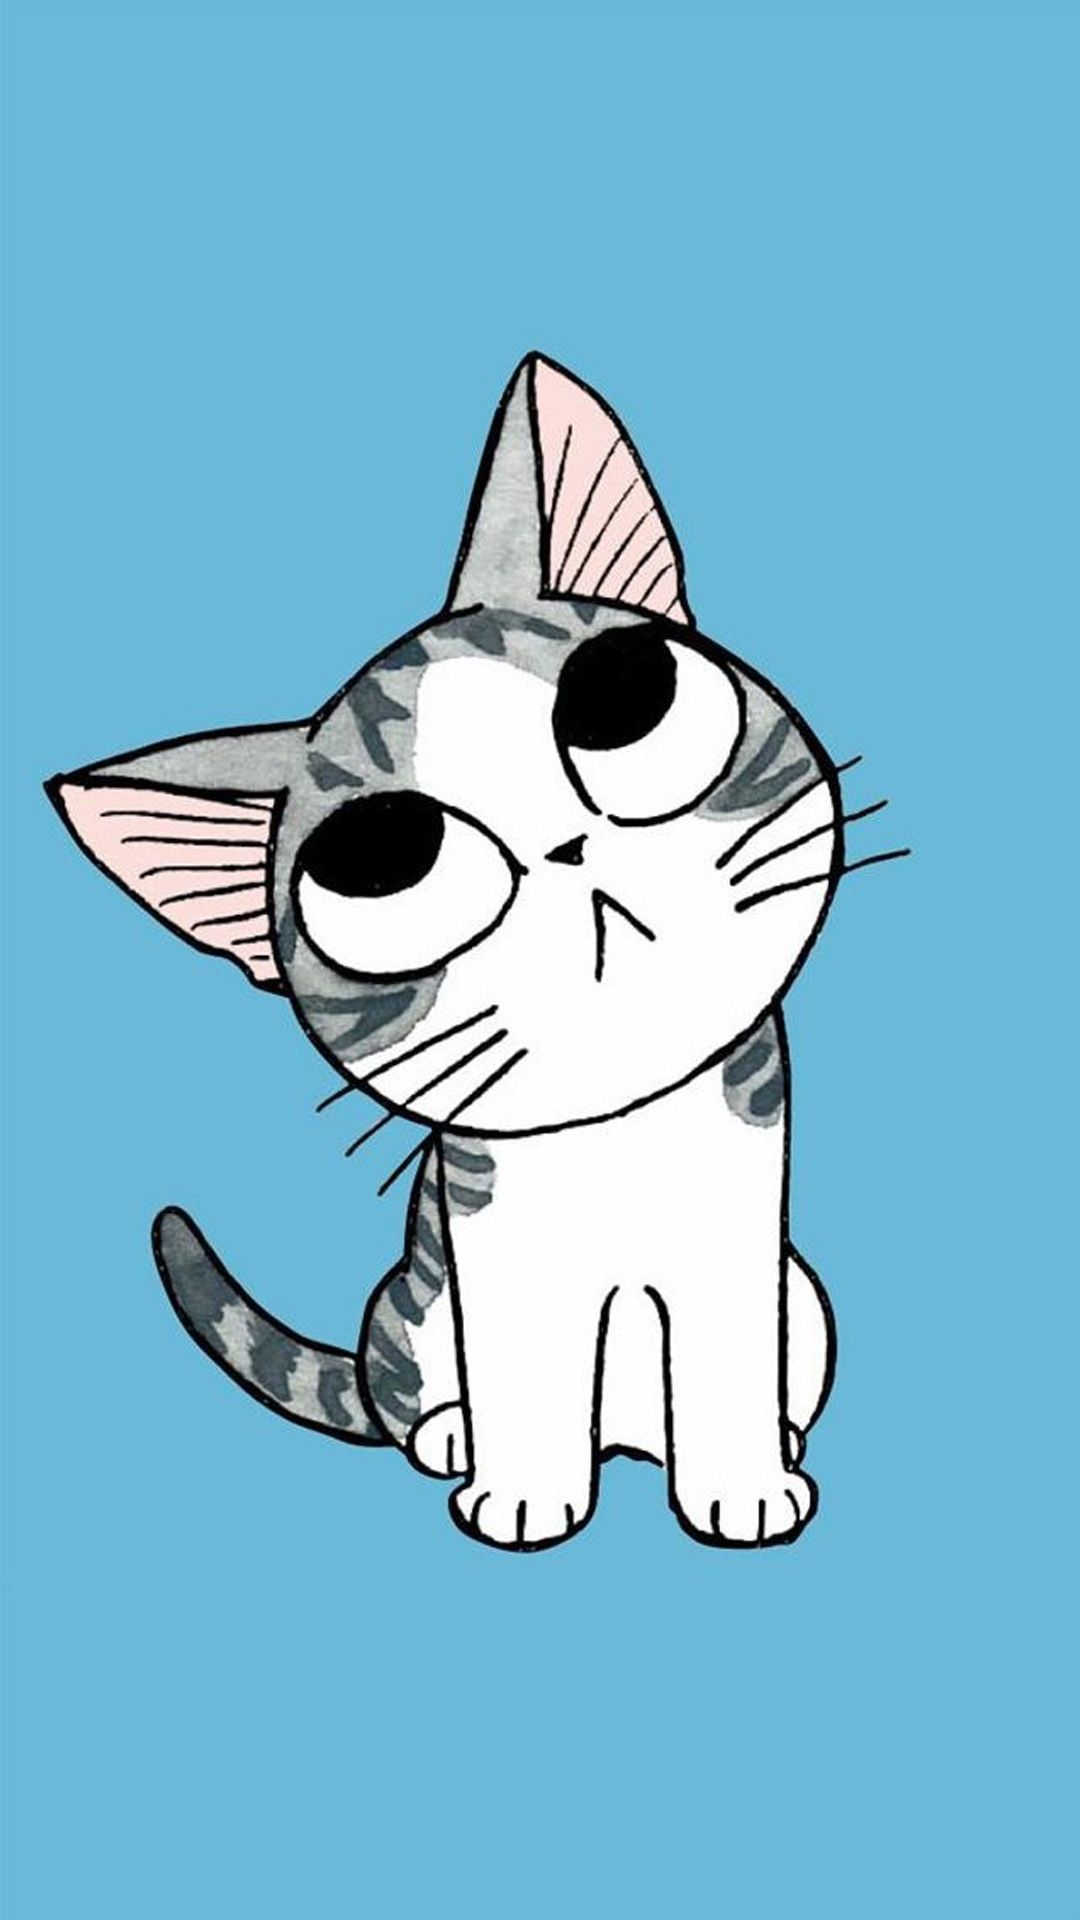 Cute Cartoon Kitten iPhone 8 Wallpaper Free Download in J7 Cartoon Wallpaper 4K. Cute cat wallpaper, Kitten cartoon, Cute cartoon animals